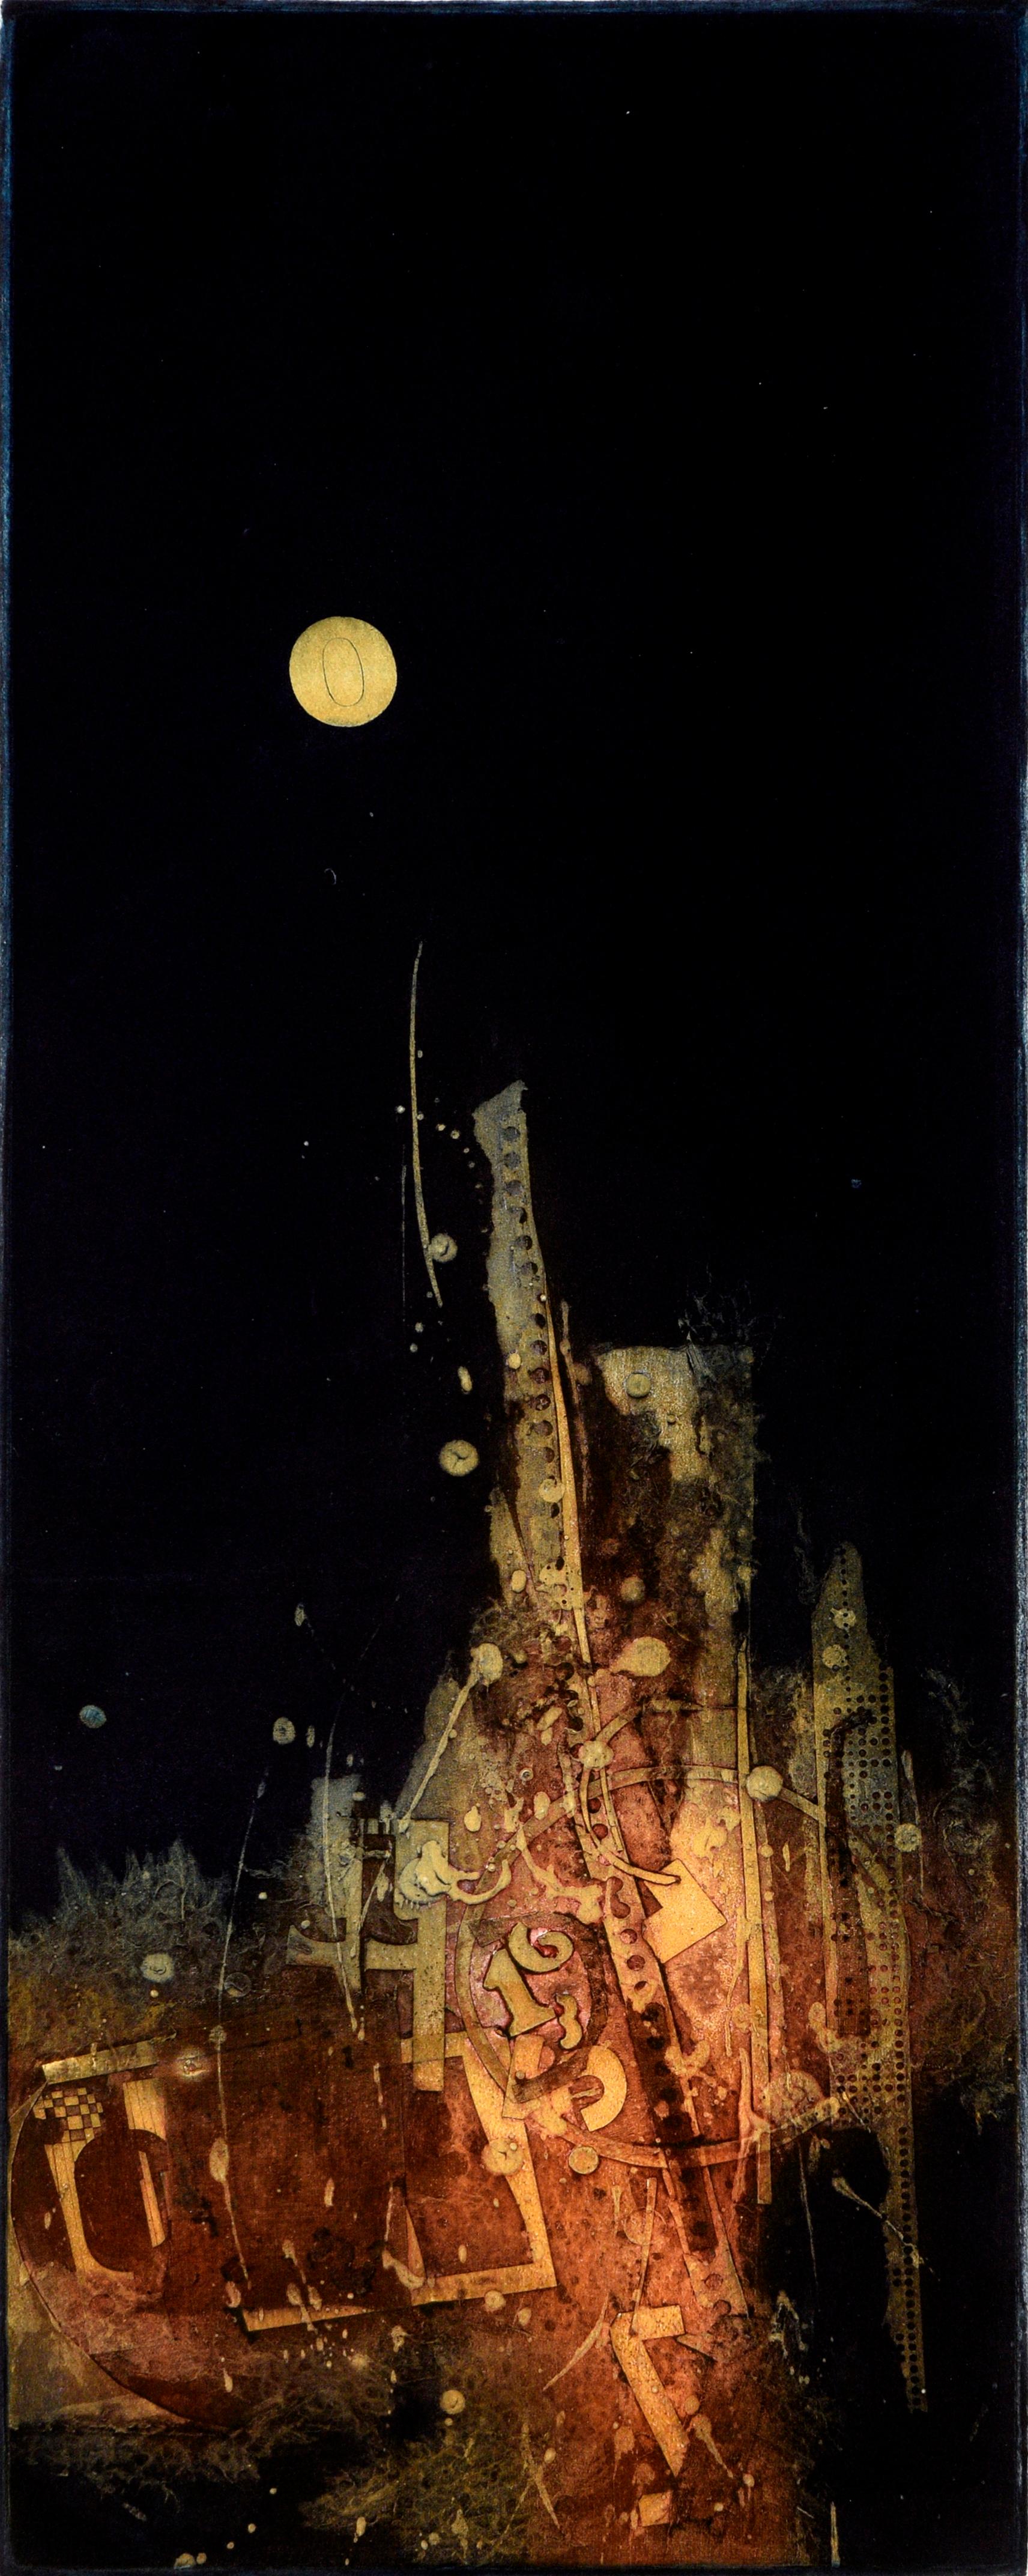 Abstrakte Lava-Landschaft in voller Mondform, Lithographie #2, Nocturne – Print von Patricia A Pearce